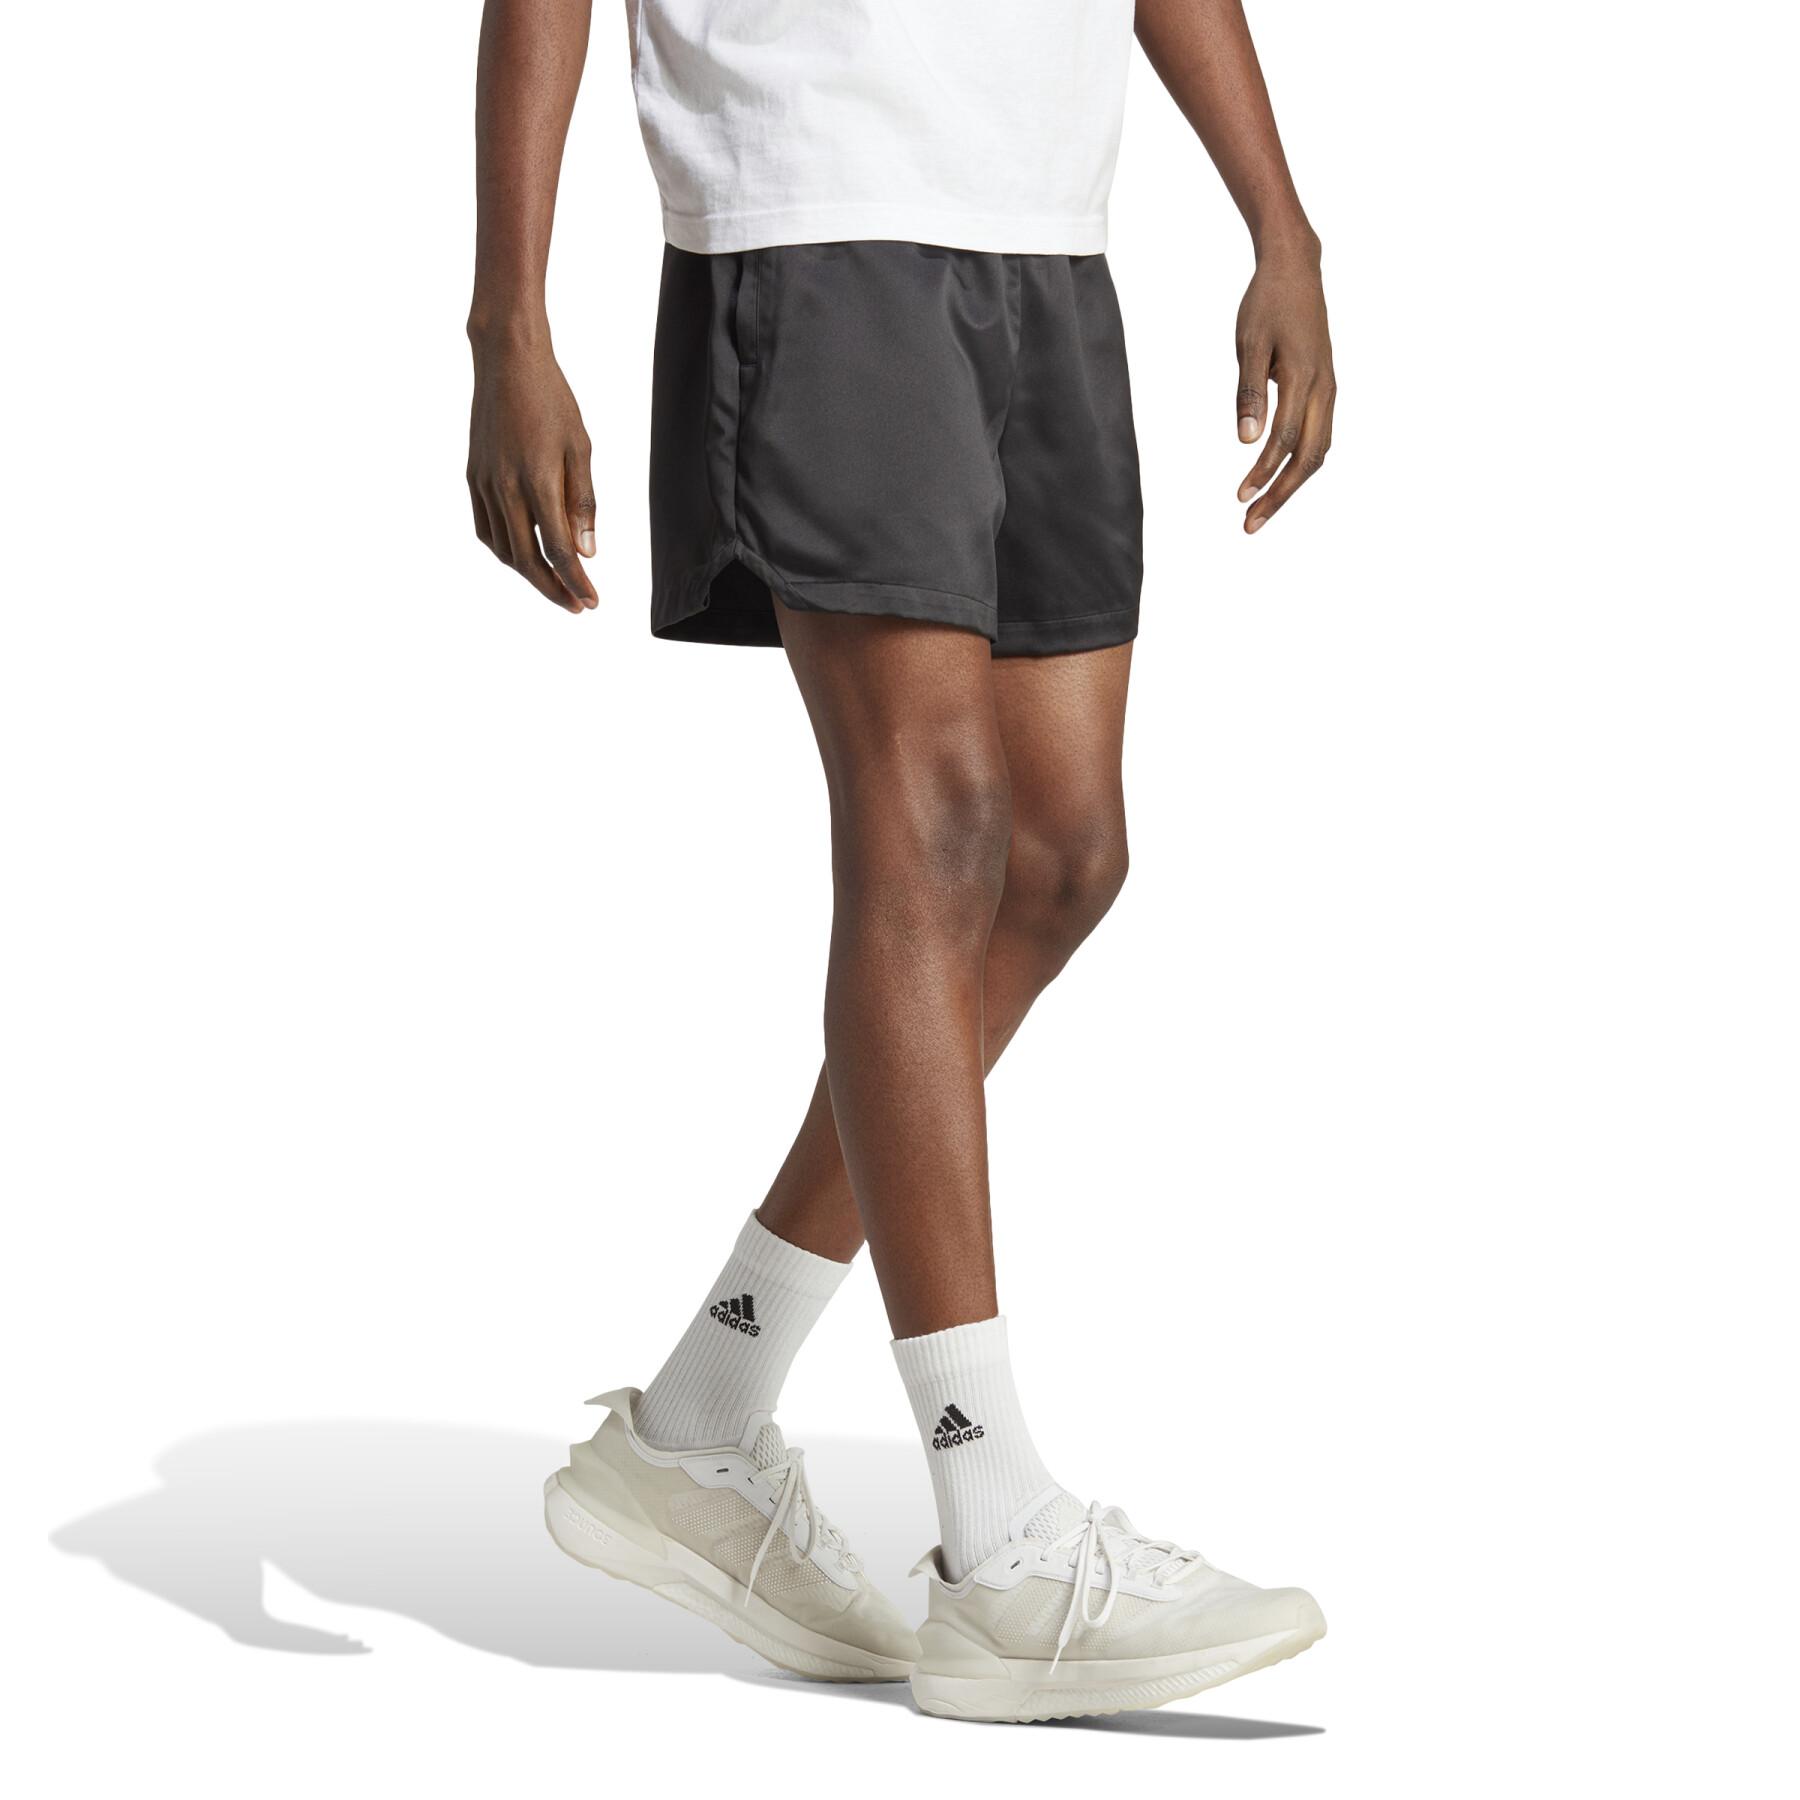 Satin shorts adidas